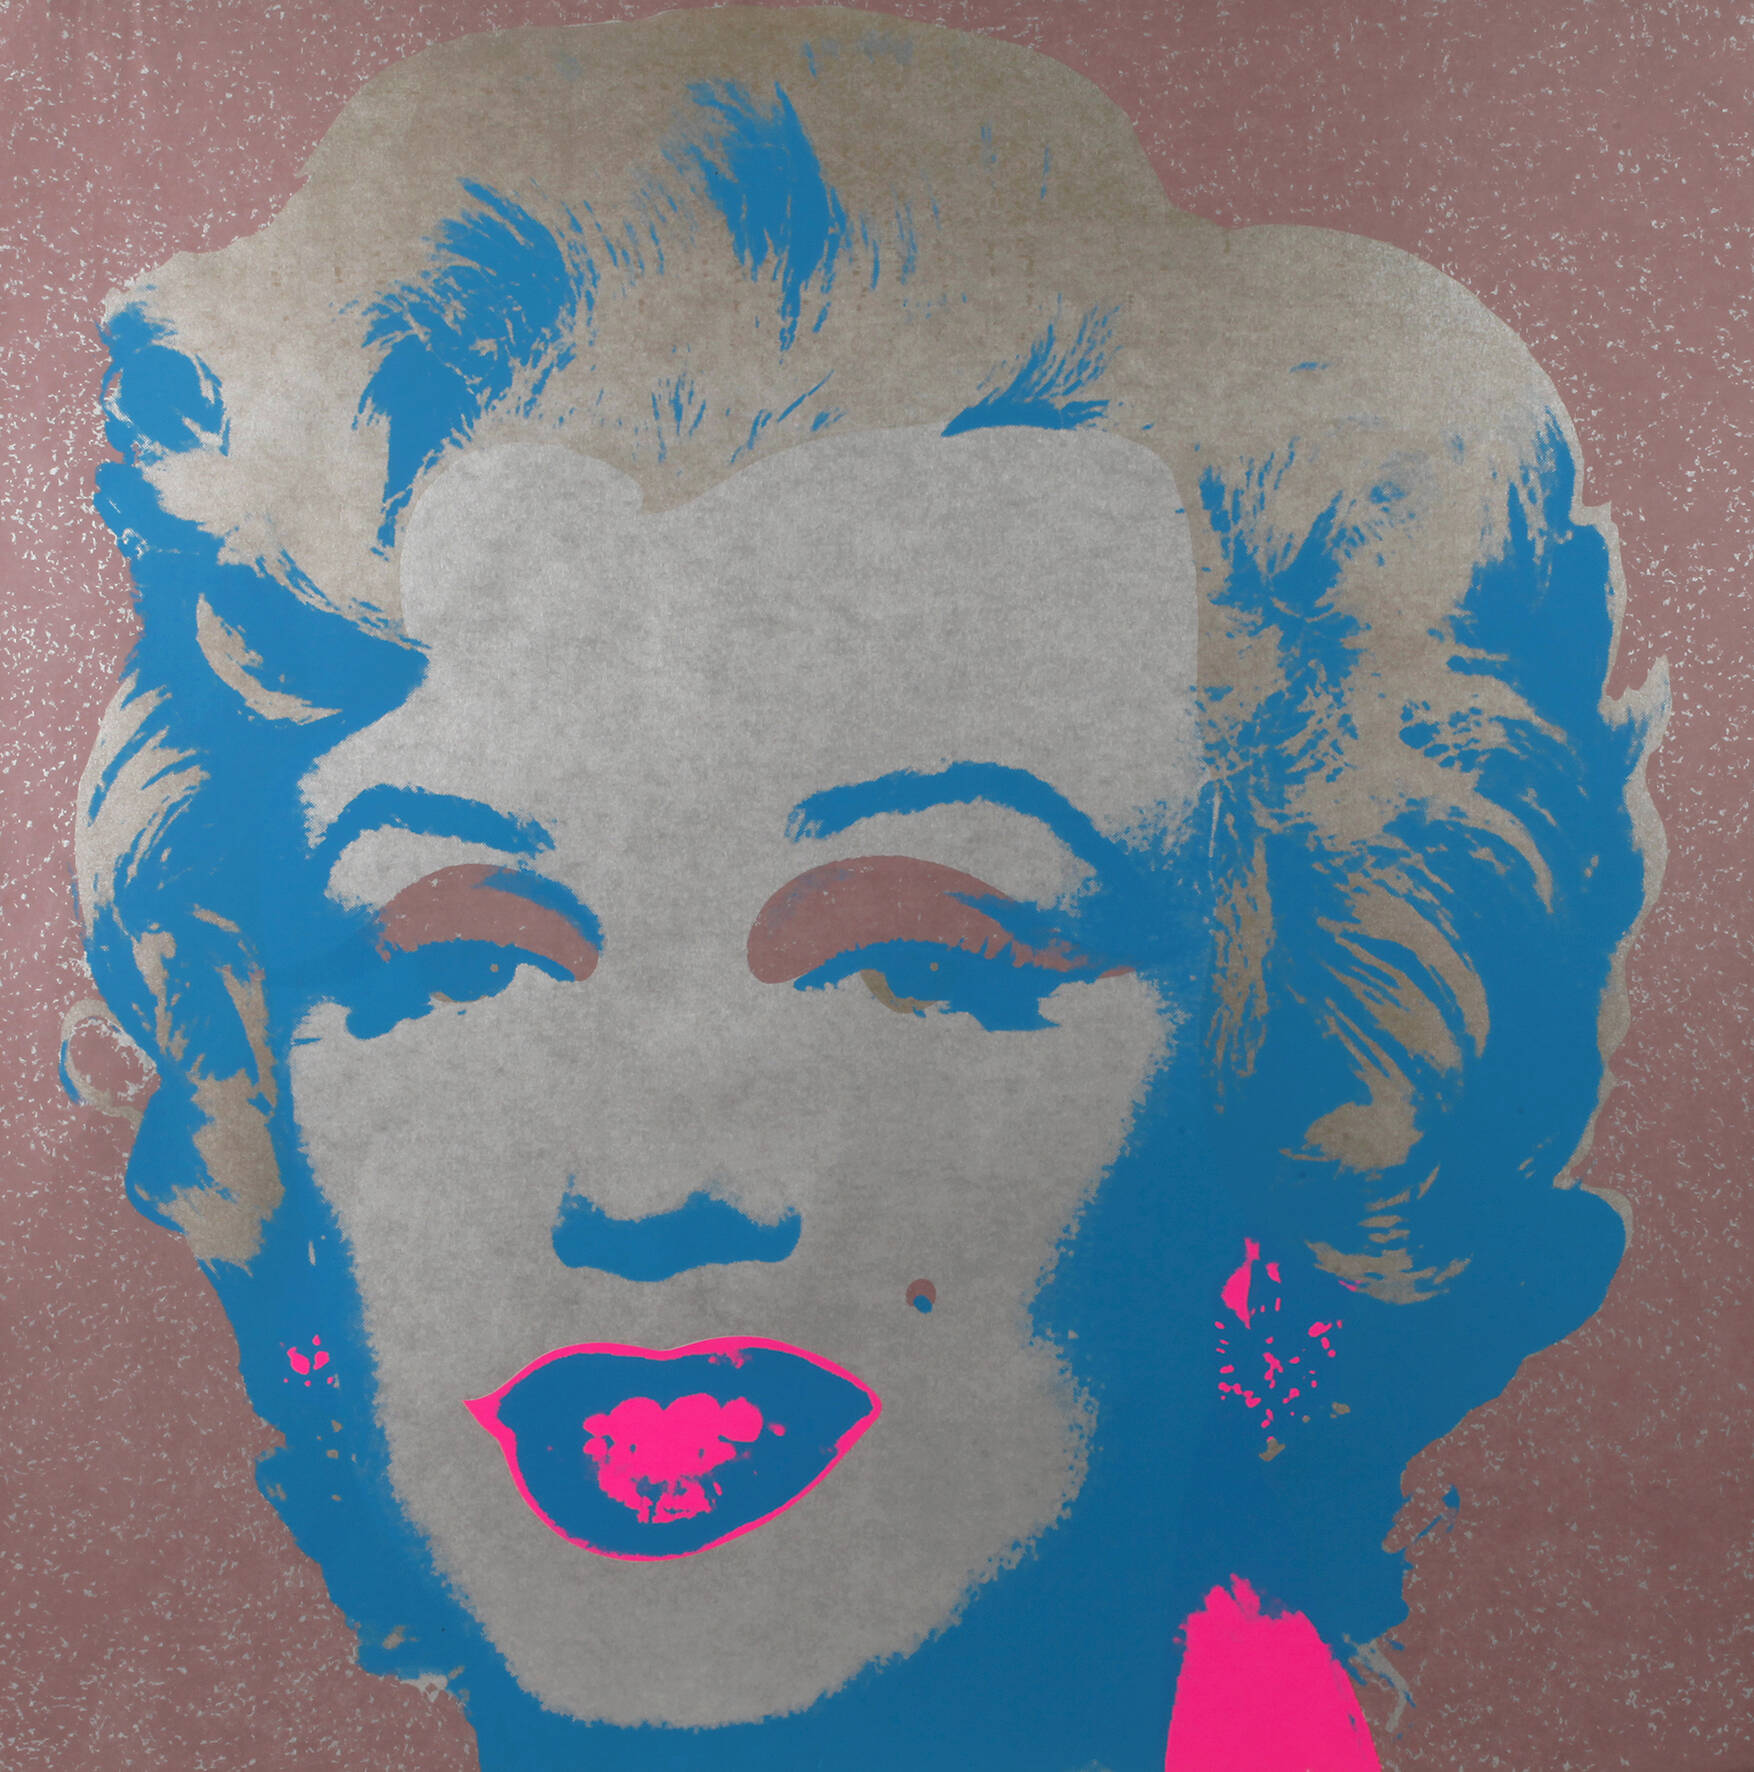 Andy Warhol, "Marilyn Monroe"